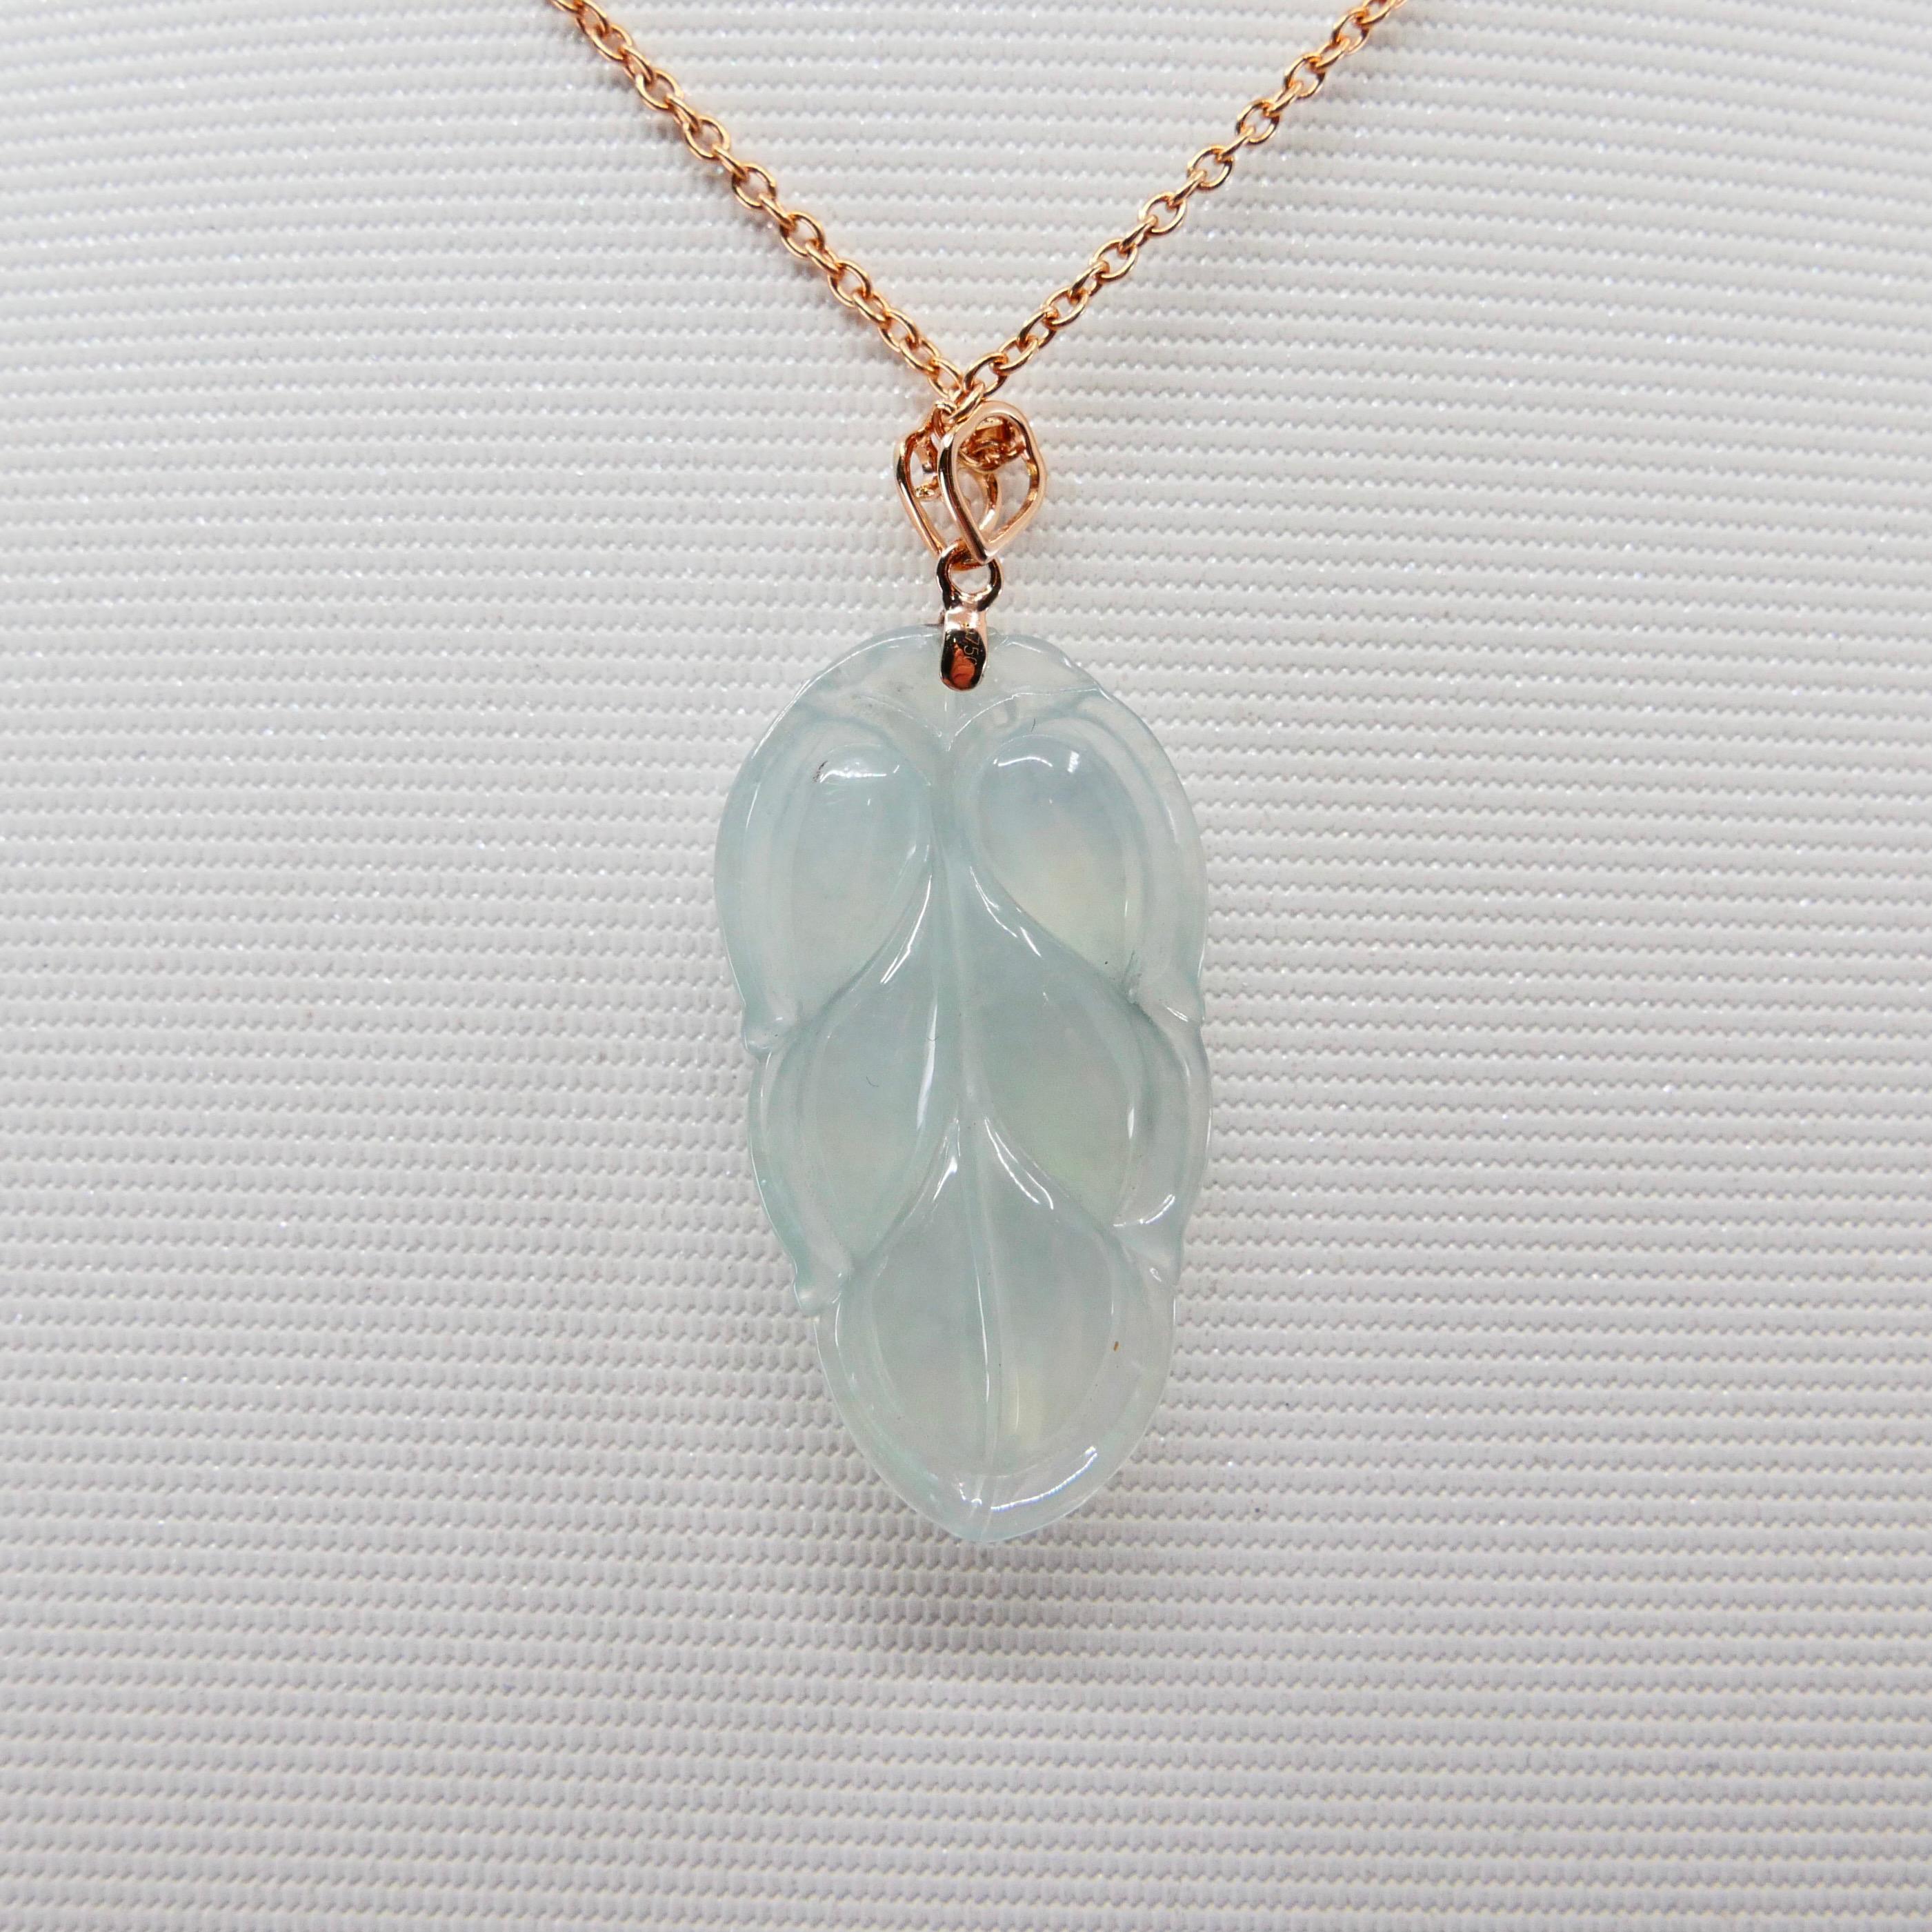 Rough Cut Certified 18.32 Carat Icy Jadeite Jade Leaf Pendant Necklace, Good Fortune For Sale